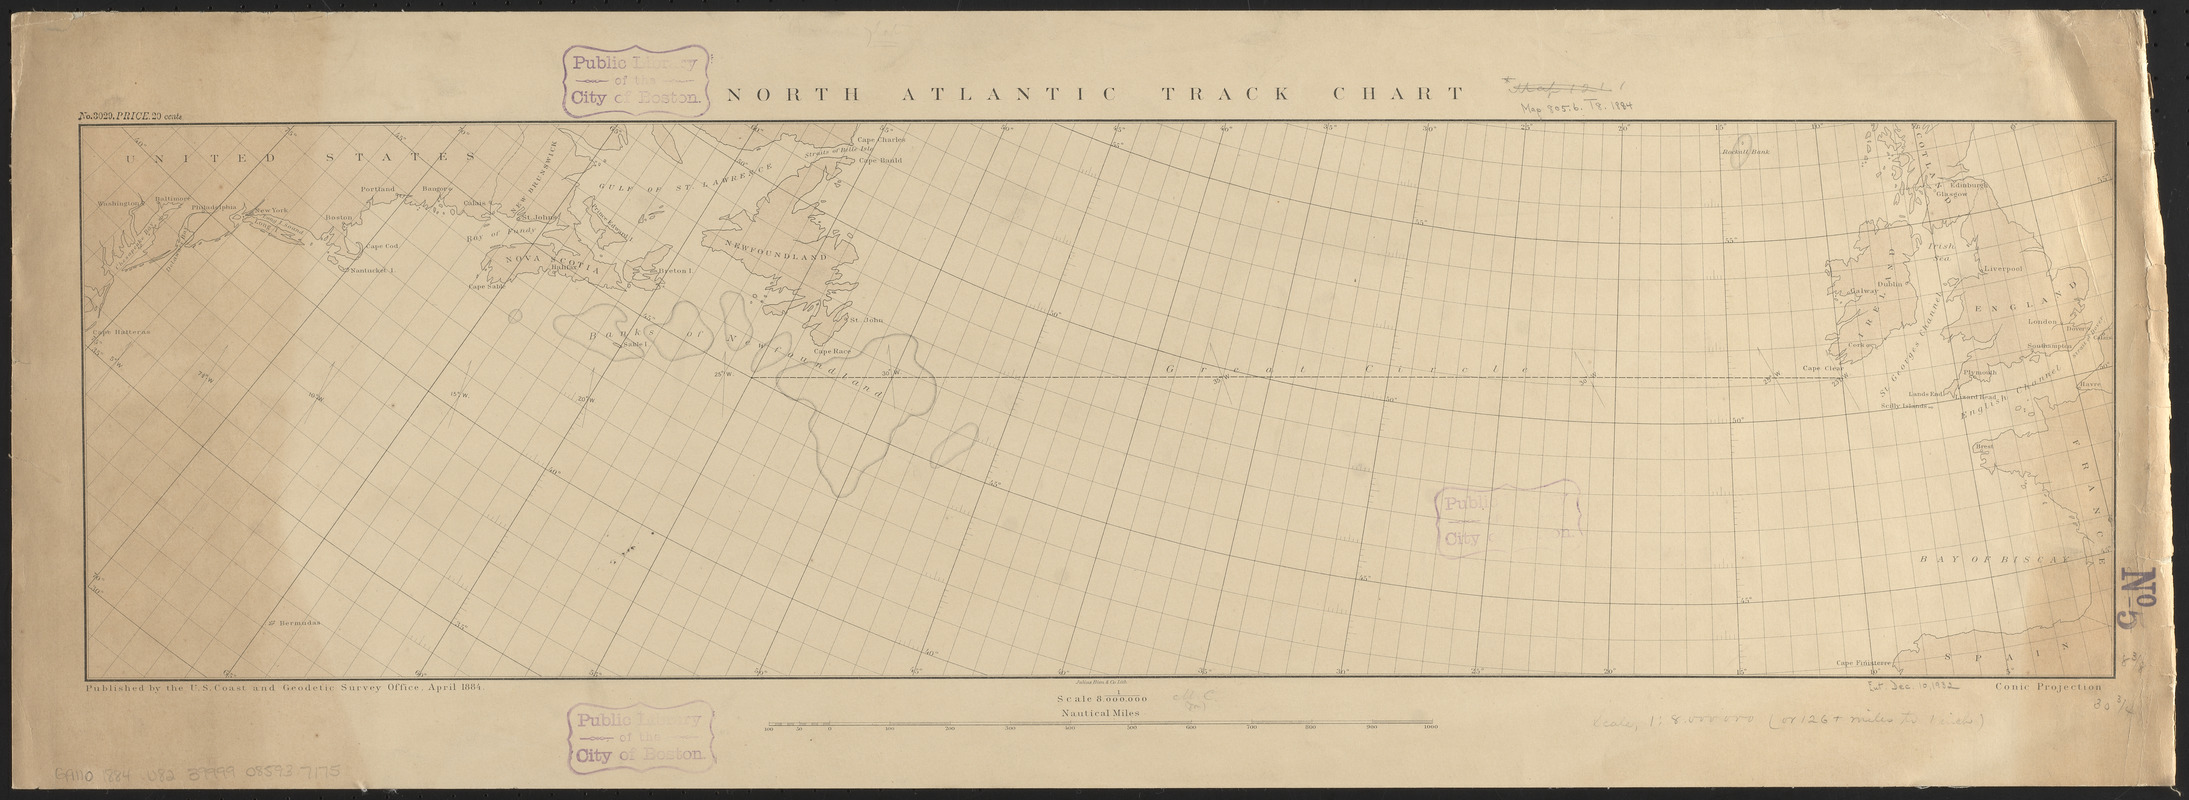 North Atlantic track chart